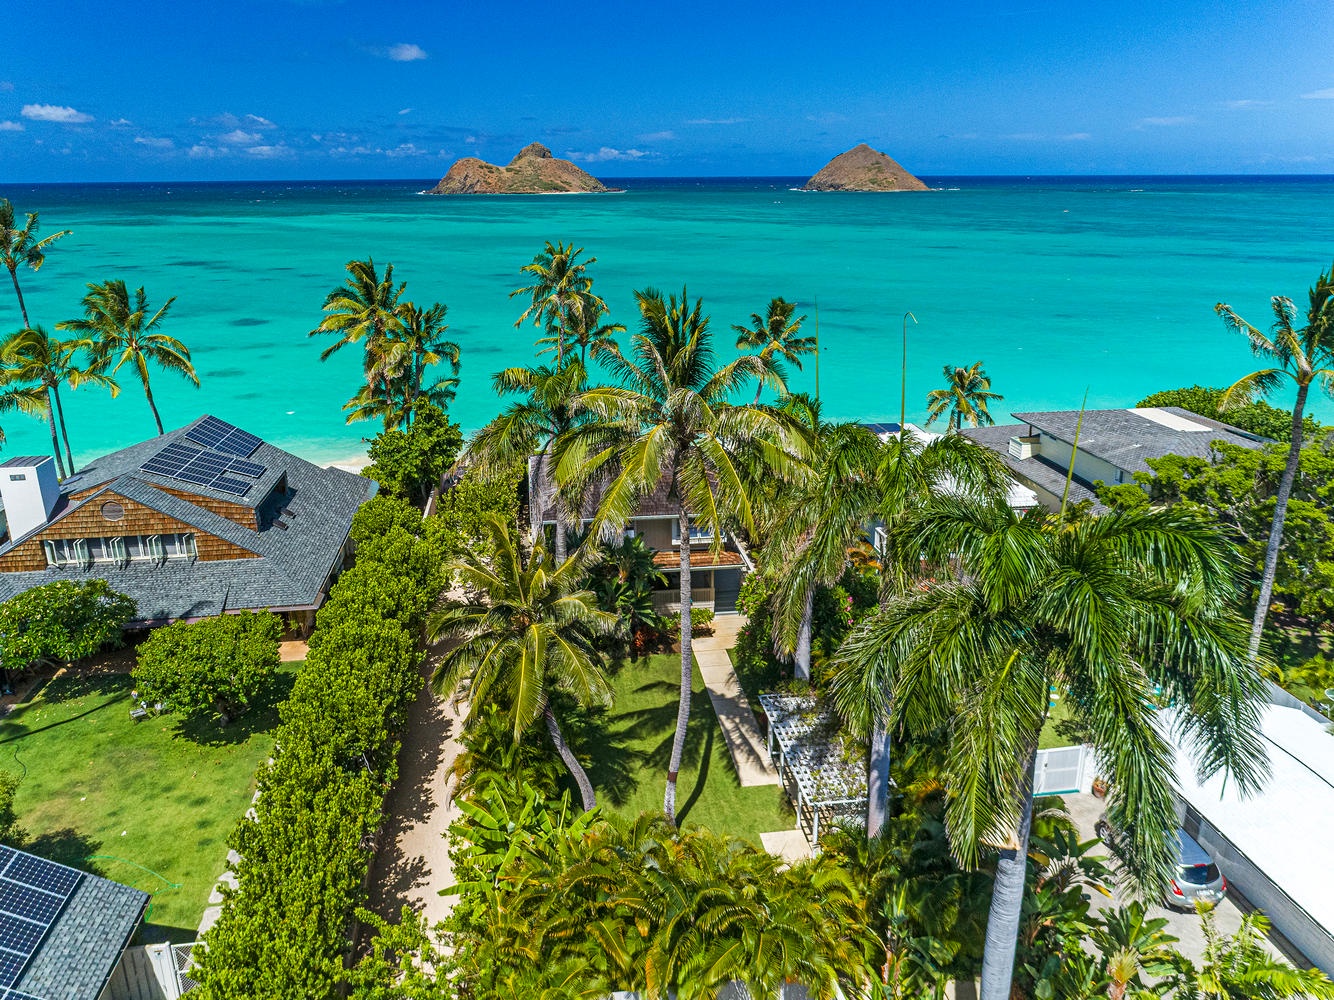 Kailua Vacation Rentals, Lanikai Seashore - Enjoy unobstructed views of the vibrant ocean and Mokulua Islands